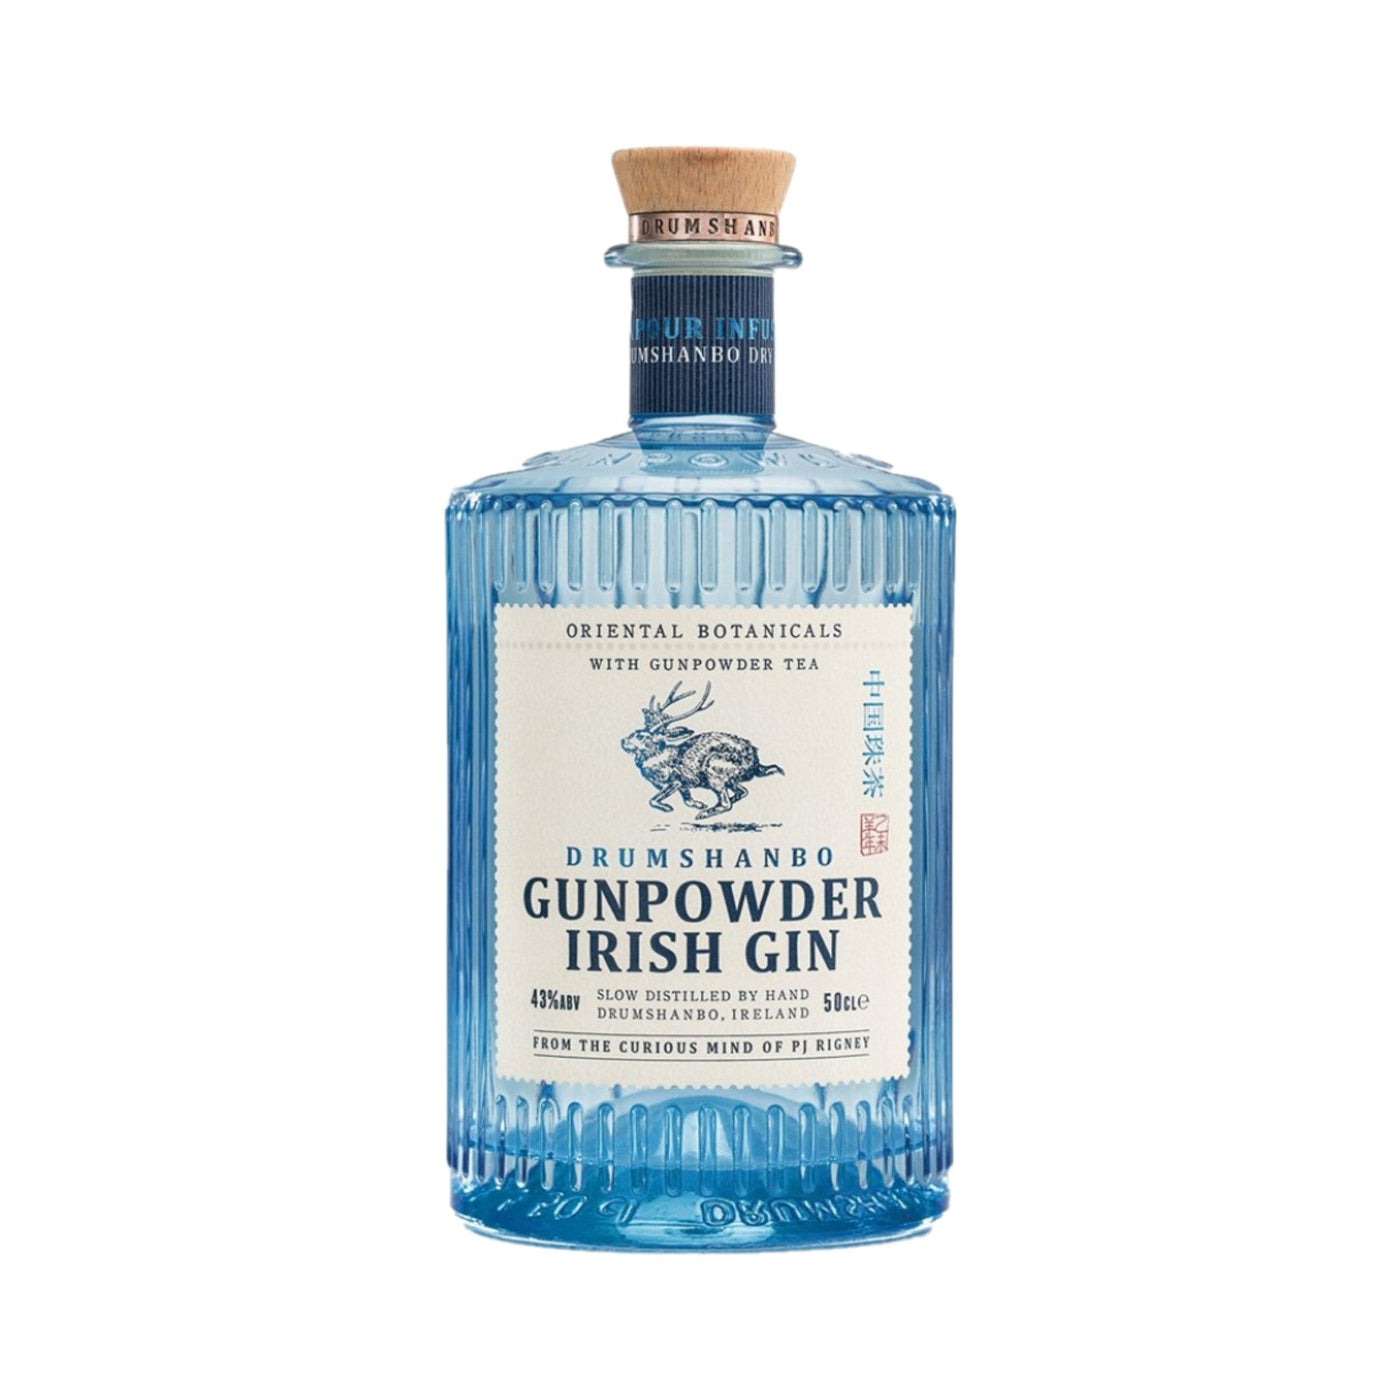 Drumshanbo Gunpowder Irish Gin 43%